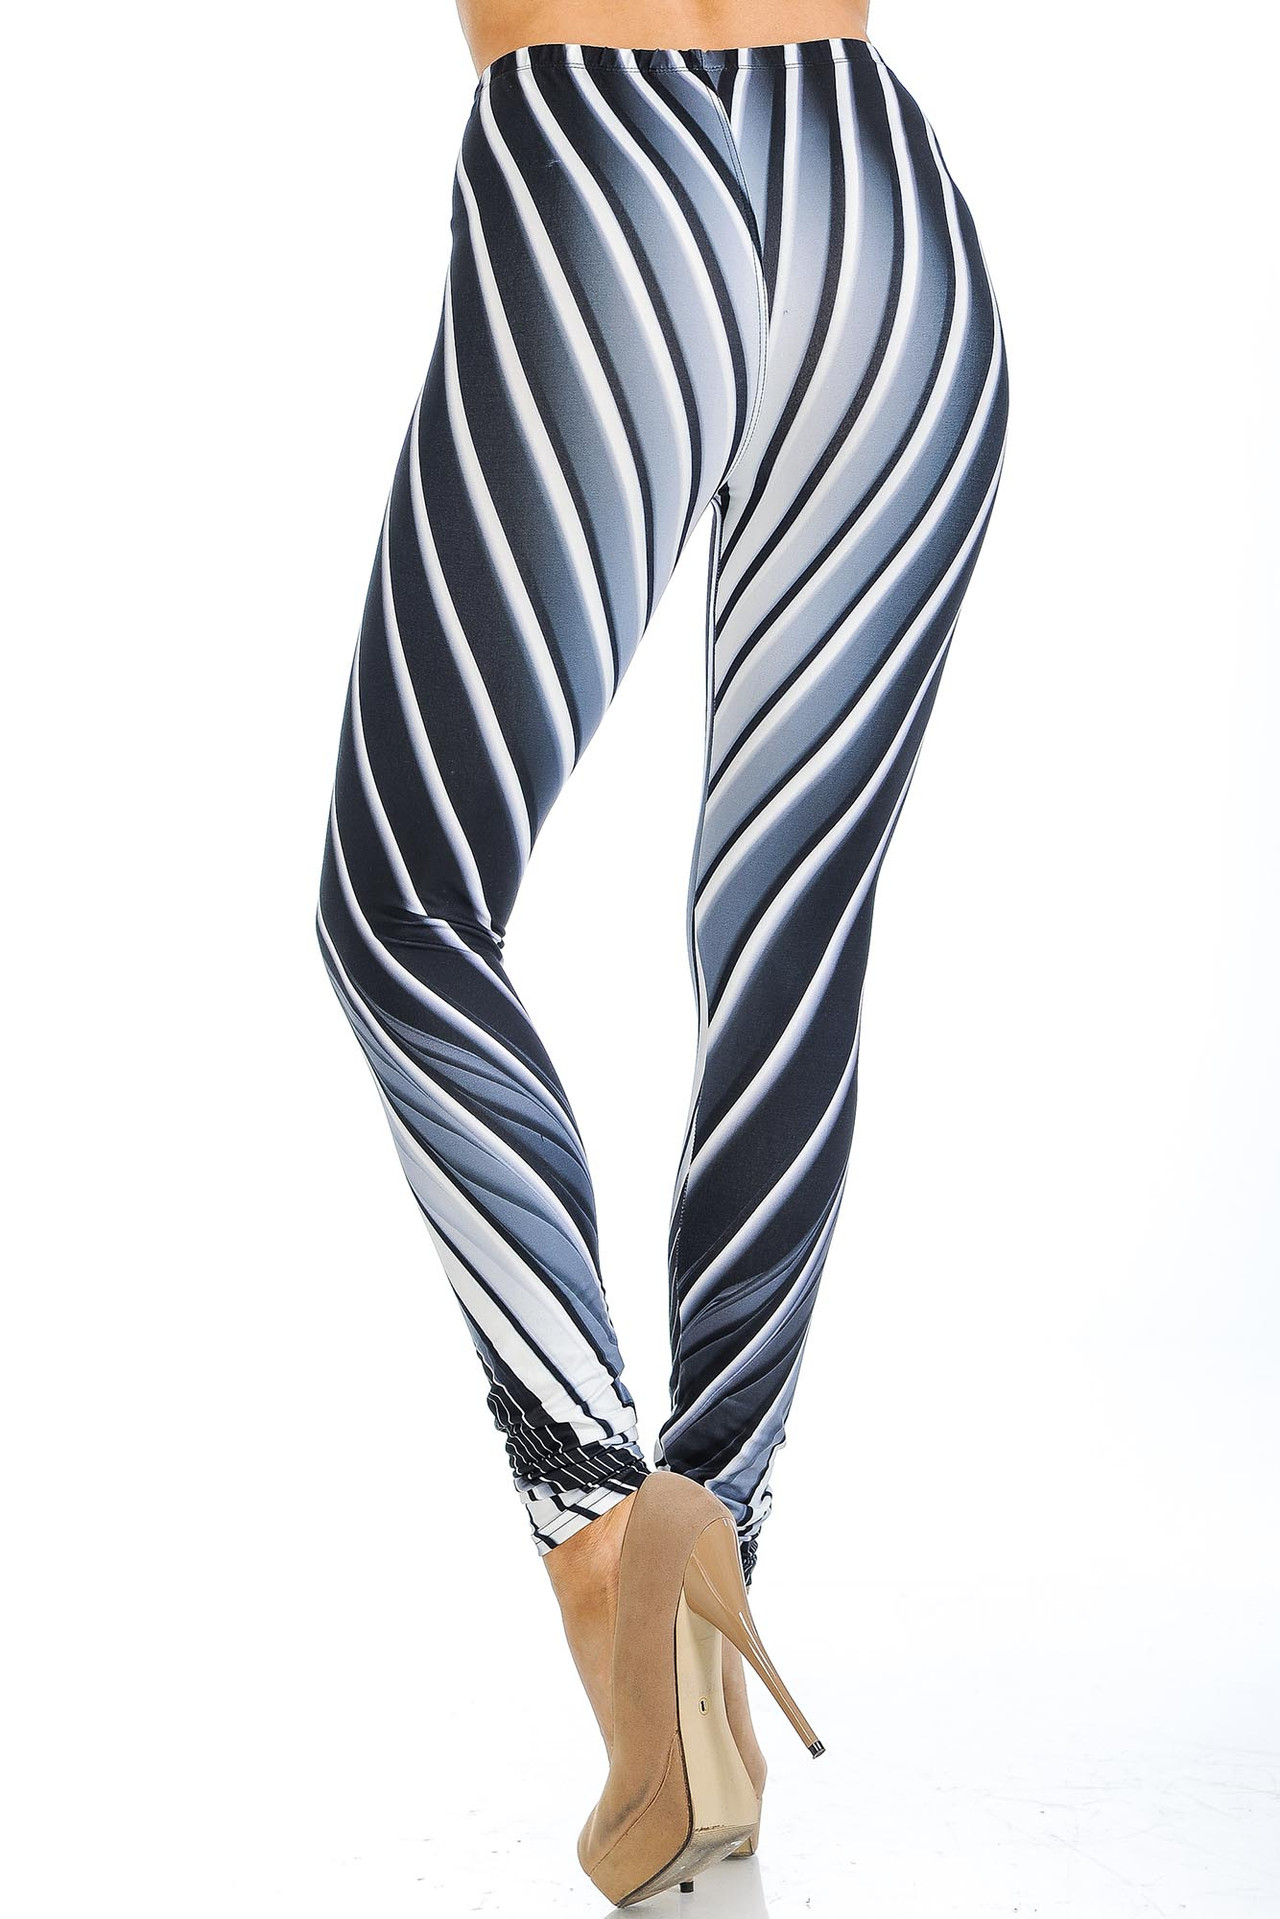 Creamy Soft Contour Body Lines Leggings - USA Fashion™